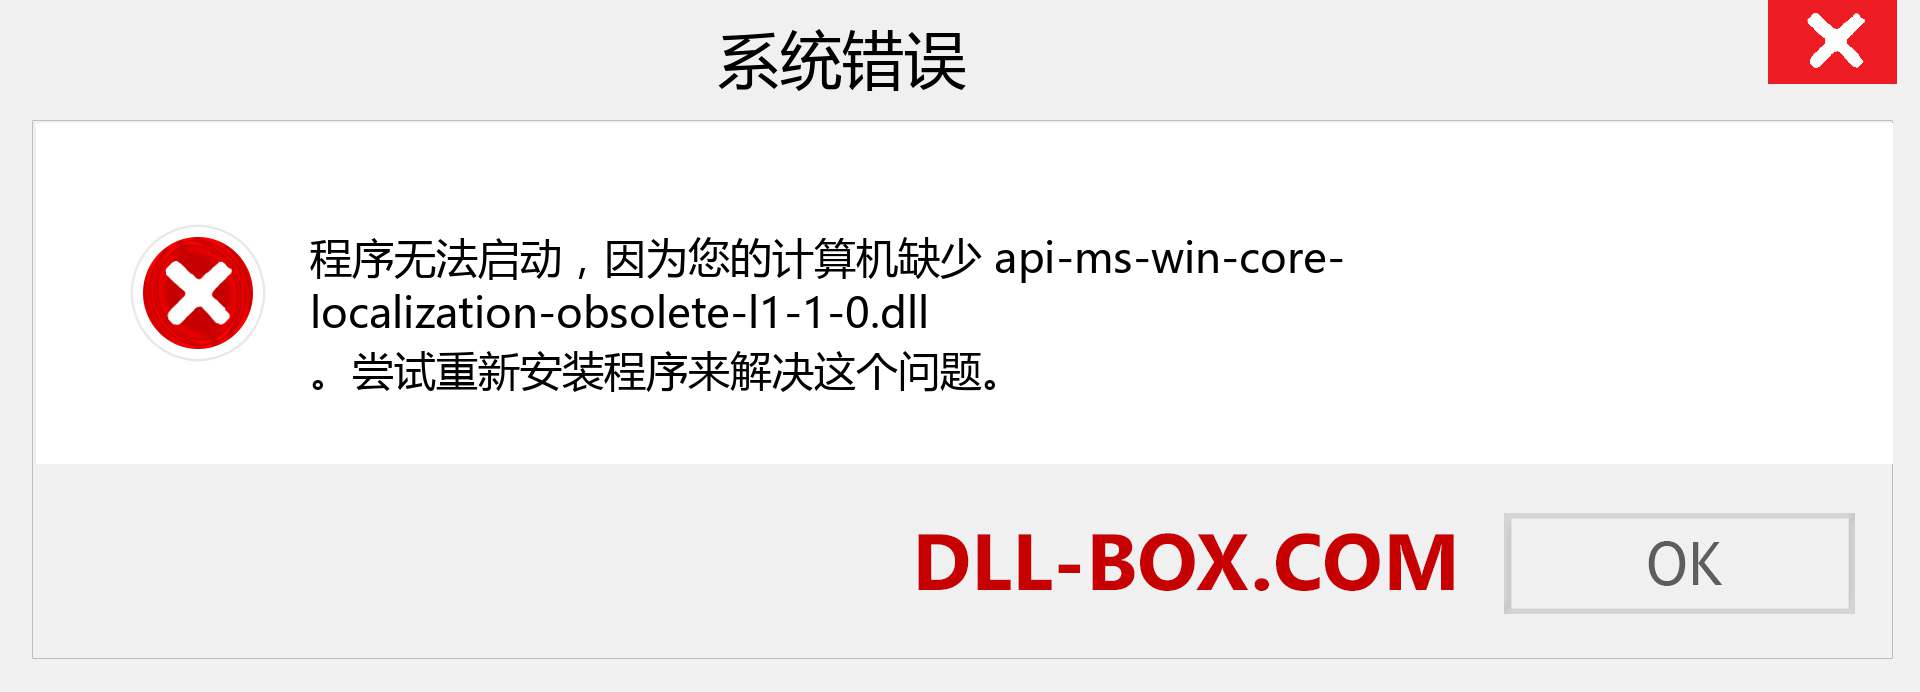 api-ms-win-core-localization-obsolete-l1-1-0.dll 文件丢失？。 适用于 Windows 7、8、10 的下载 - 修复 Windows、照片、图像上的 api-ms-win-core-localization-obsolete-l1-1-0 dll 丢失错误